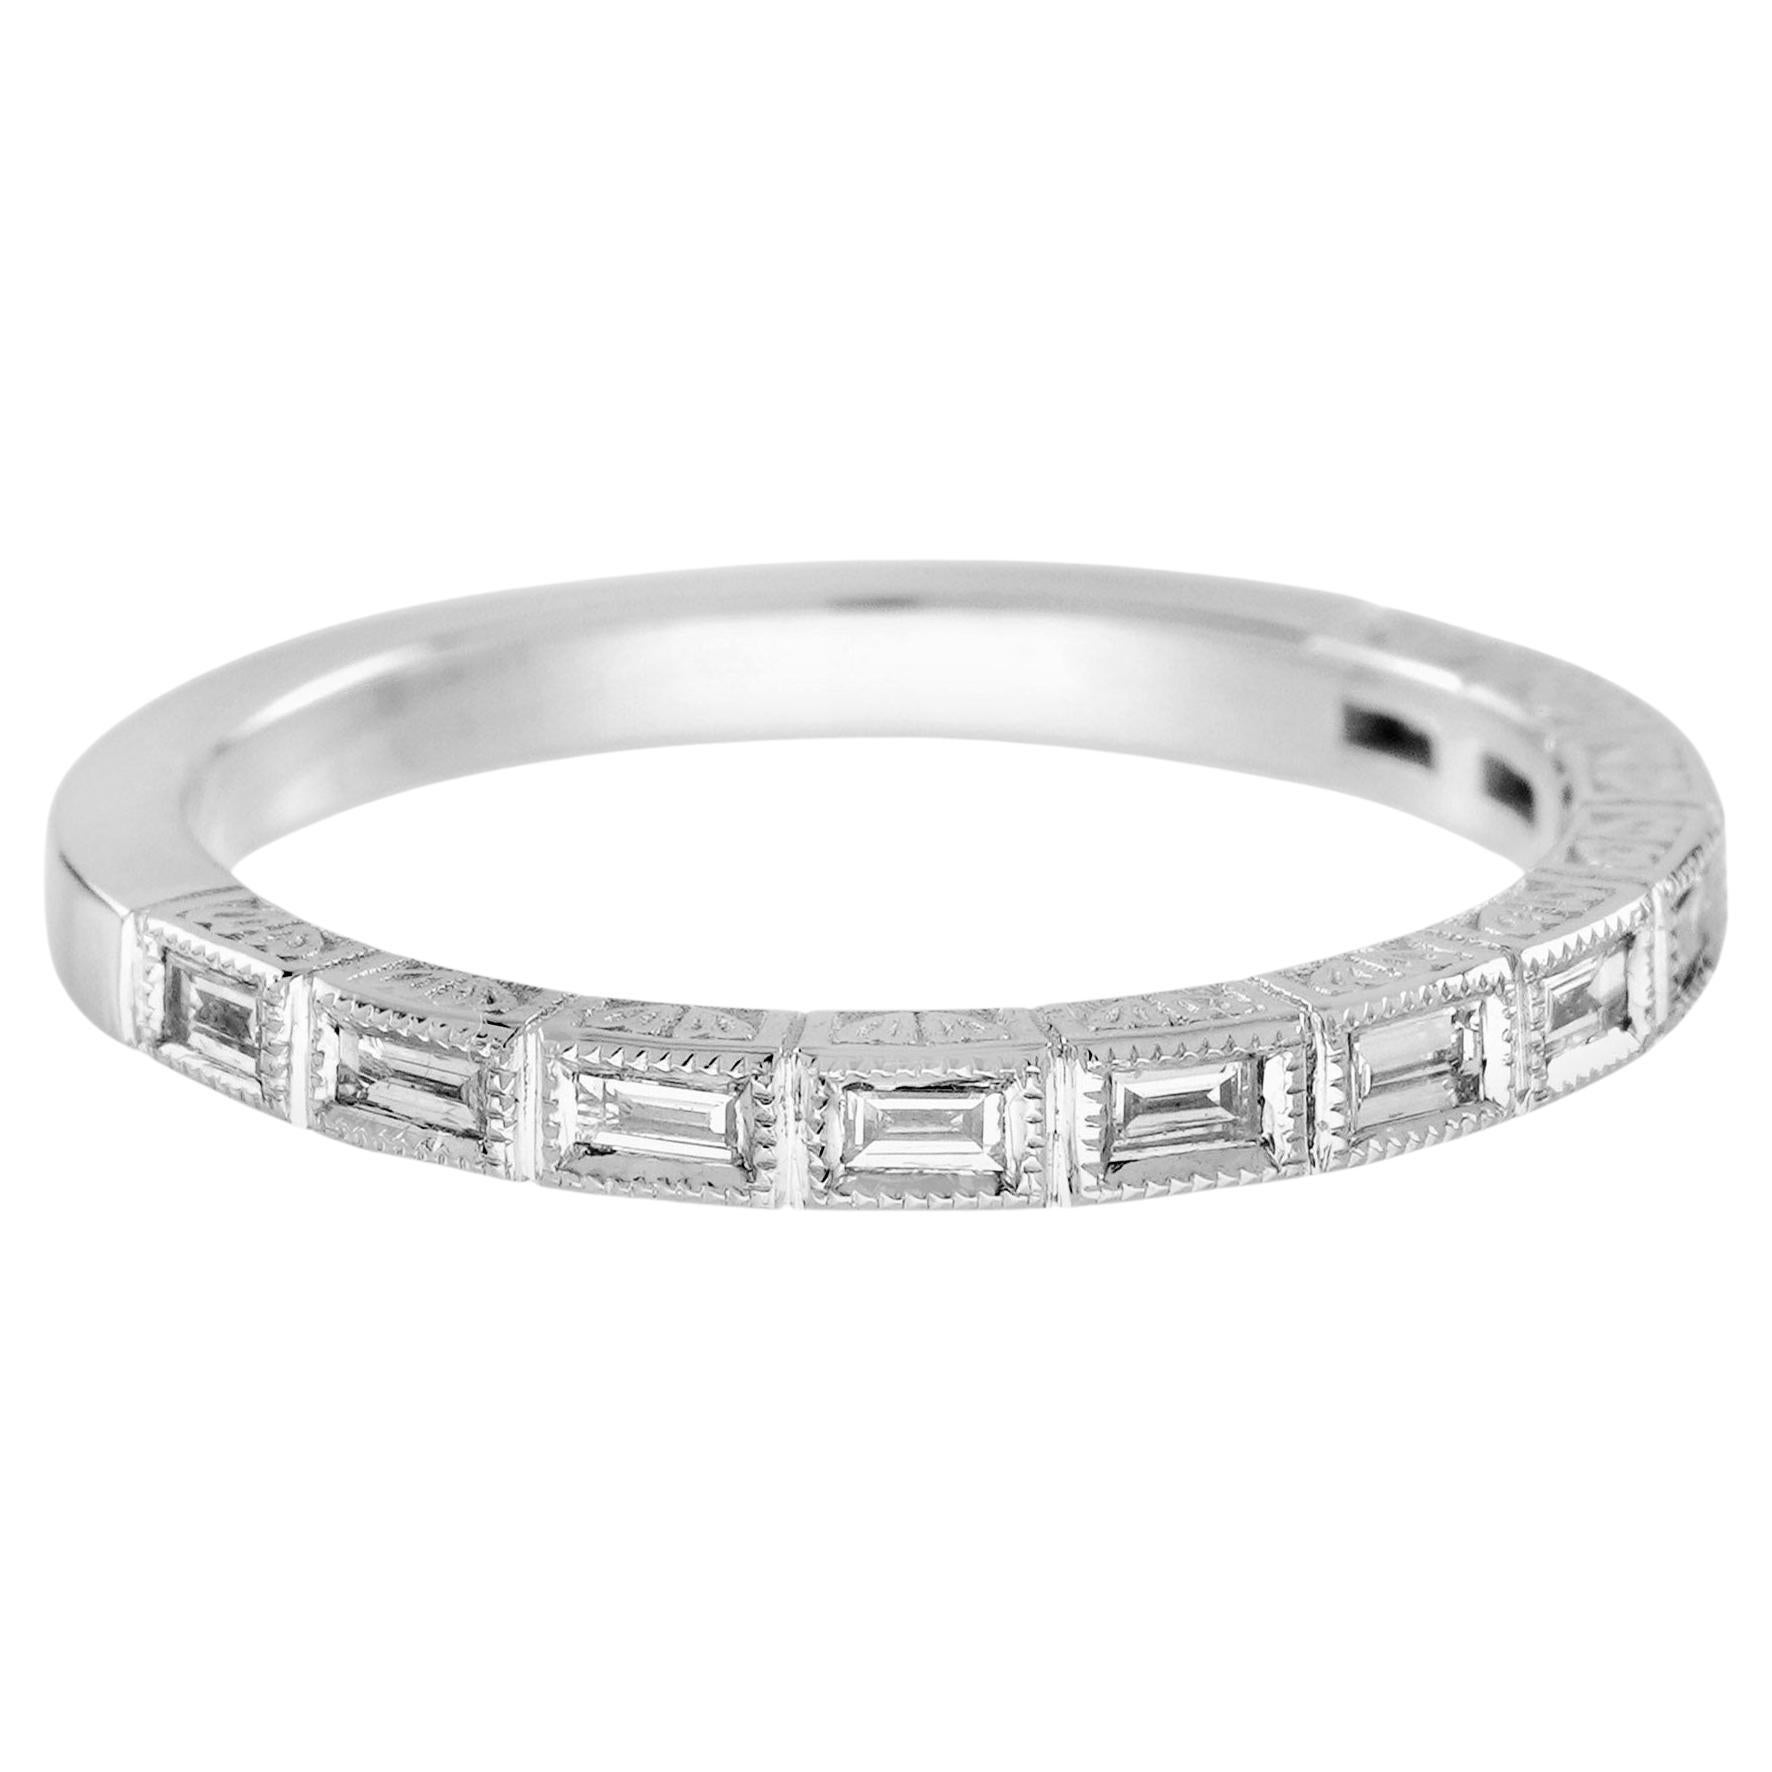 Baguette Diamond Art Deco Style Half Eternity Band Ring in 14K White Gold